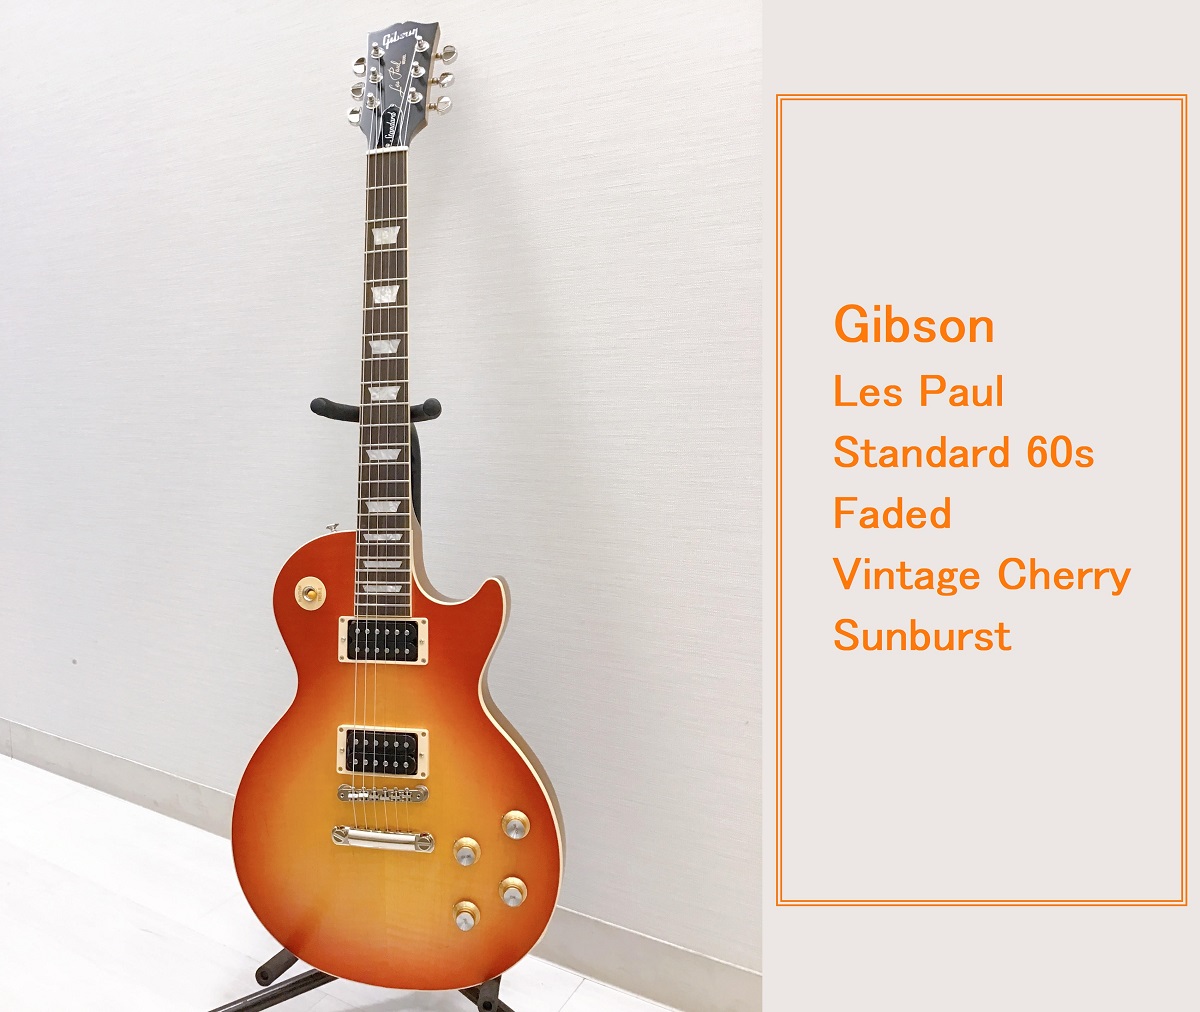 Gibson】Les Paul Standard 60s Faded Vintage Cherry Sunburst 入荷